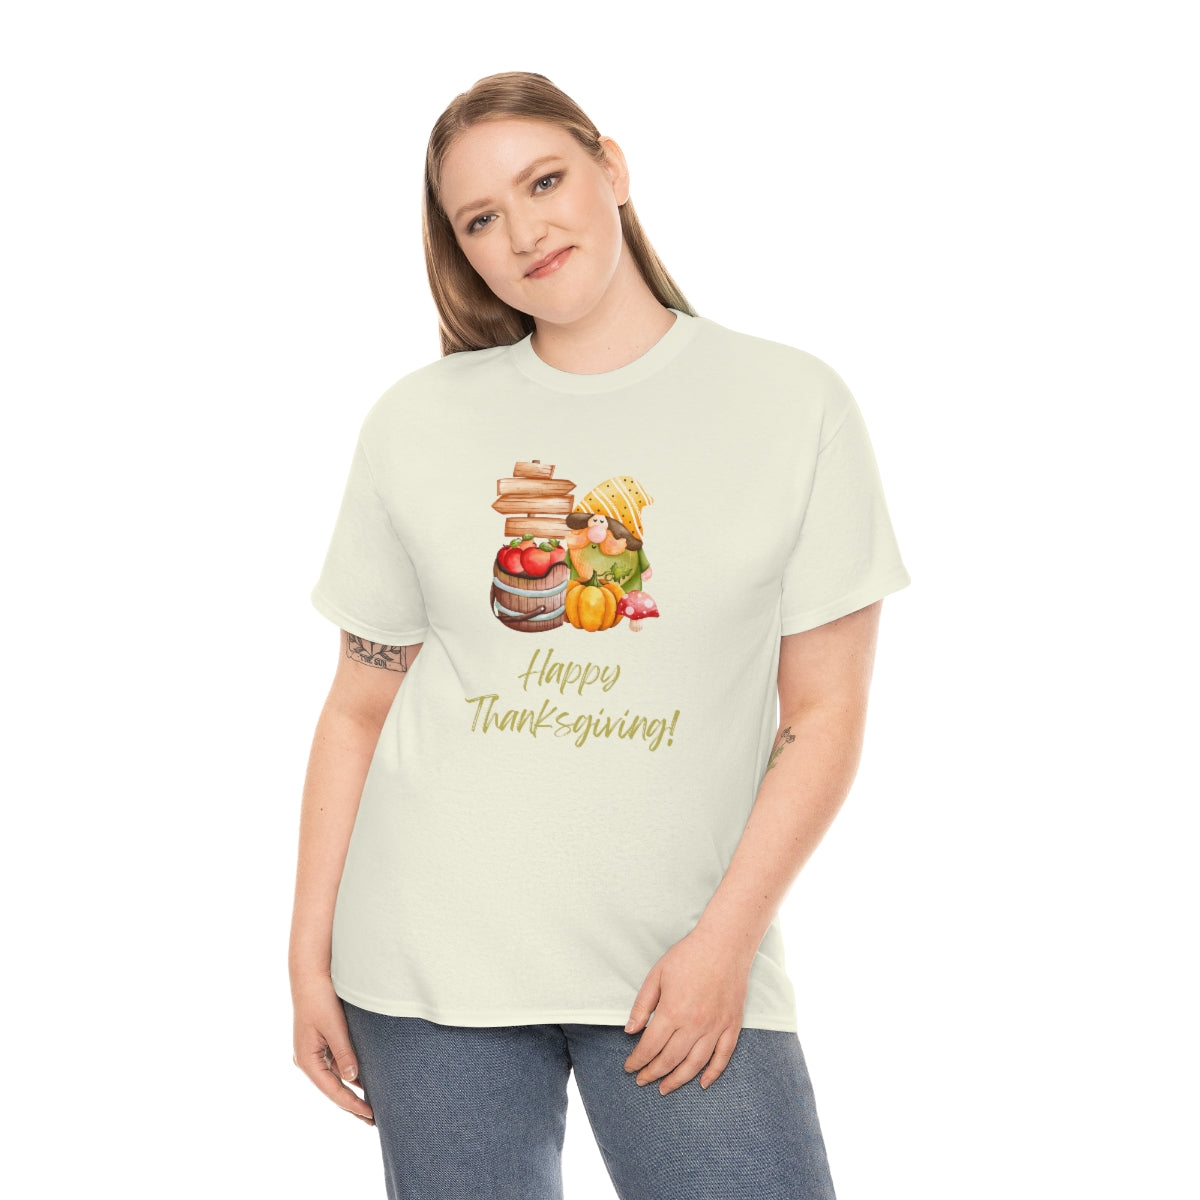 Thanksgiving Tshirt Gnome T-shirt Give Thanks Tee Gratitude Thankful Shirt Adult Fall Tees Autumn Apparel Cute Shirts Women Cute Fall Tee - The Good Life Vibe